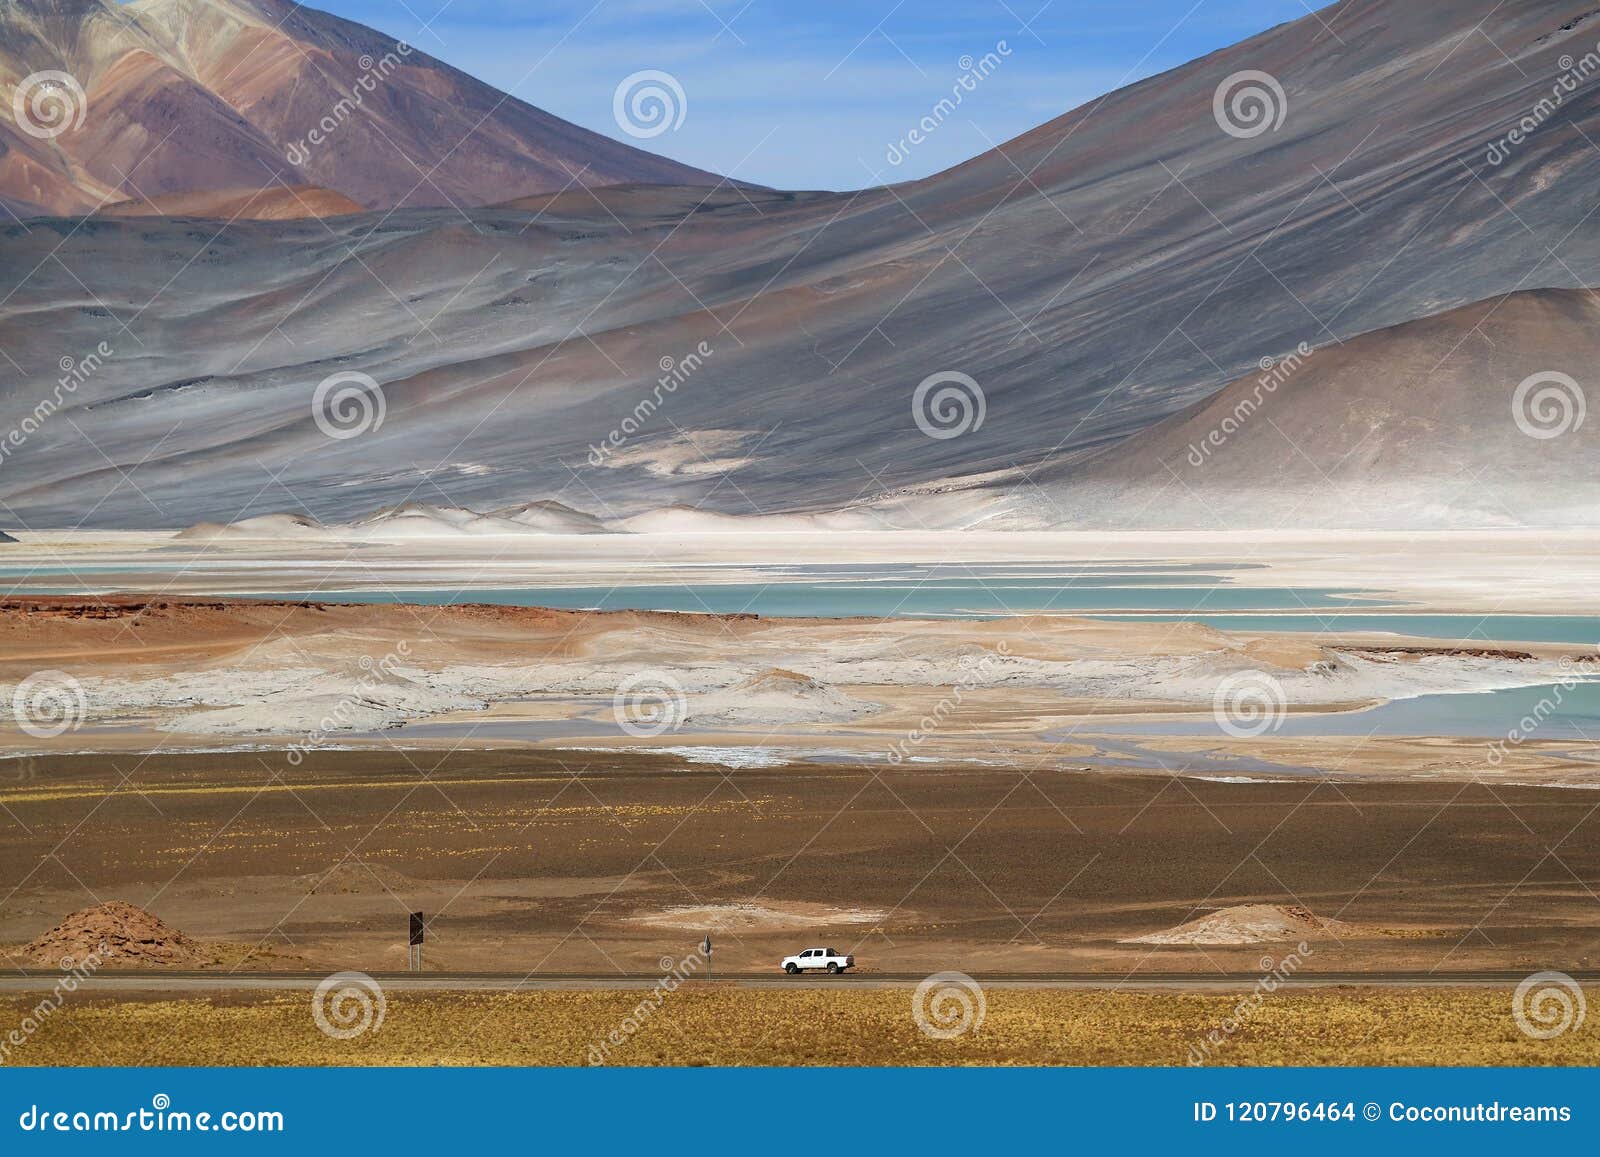 salar de talar salt flats at the foothills of majestic cerro medano, chile